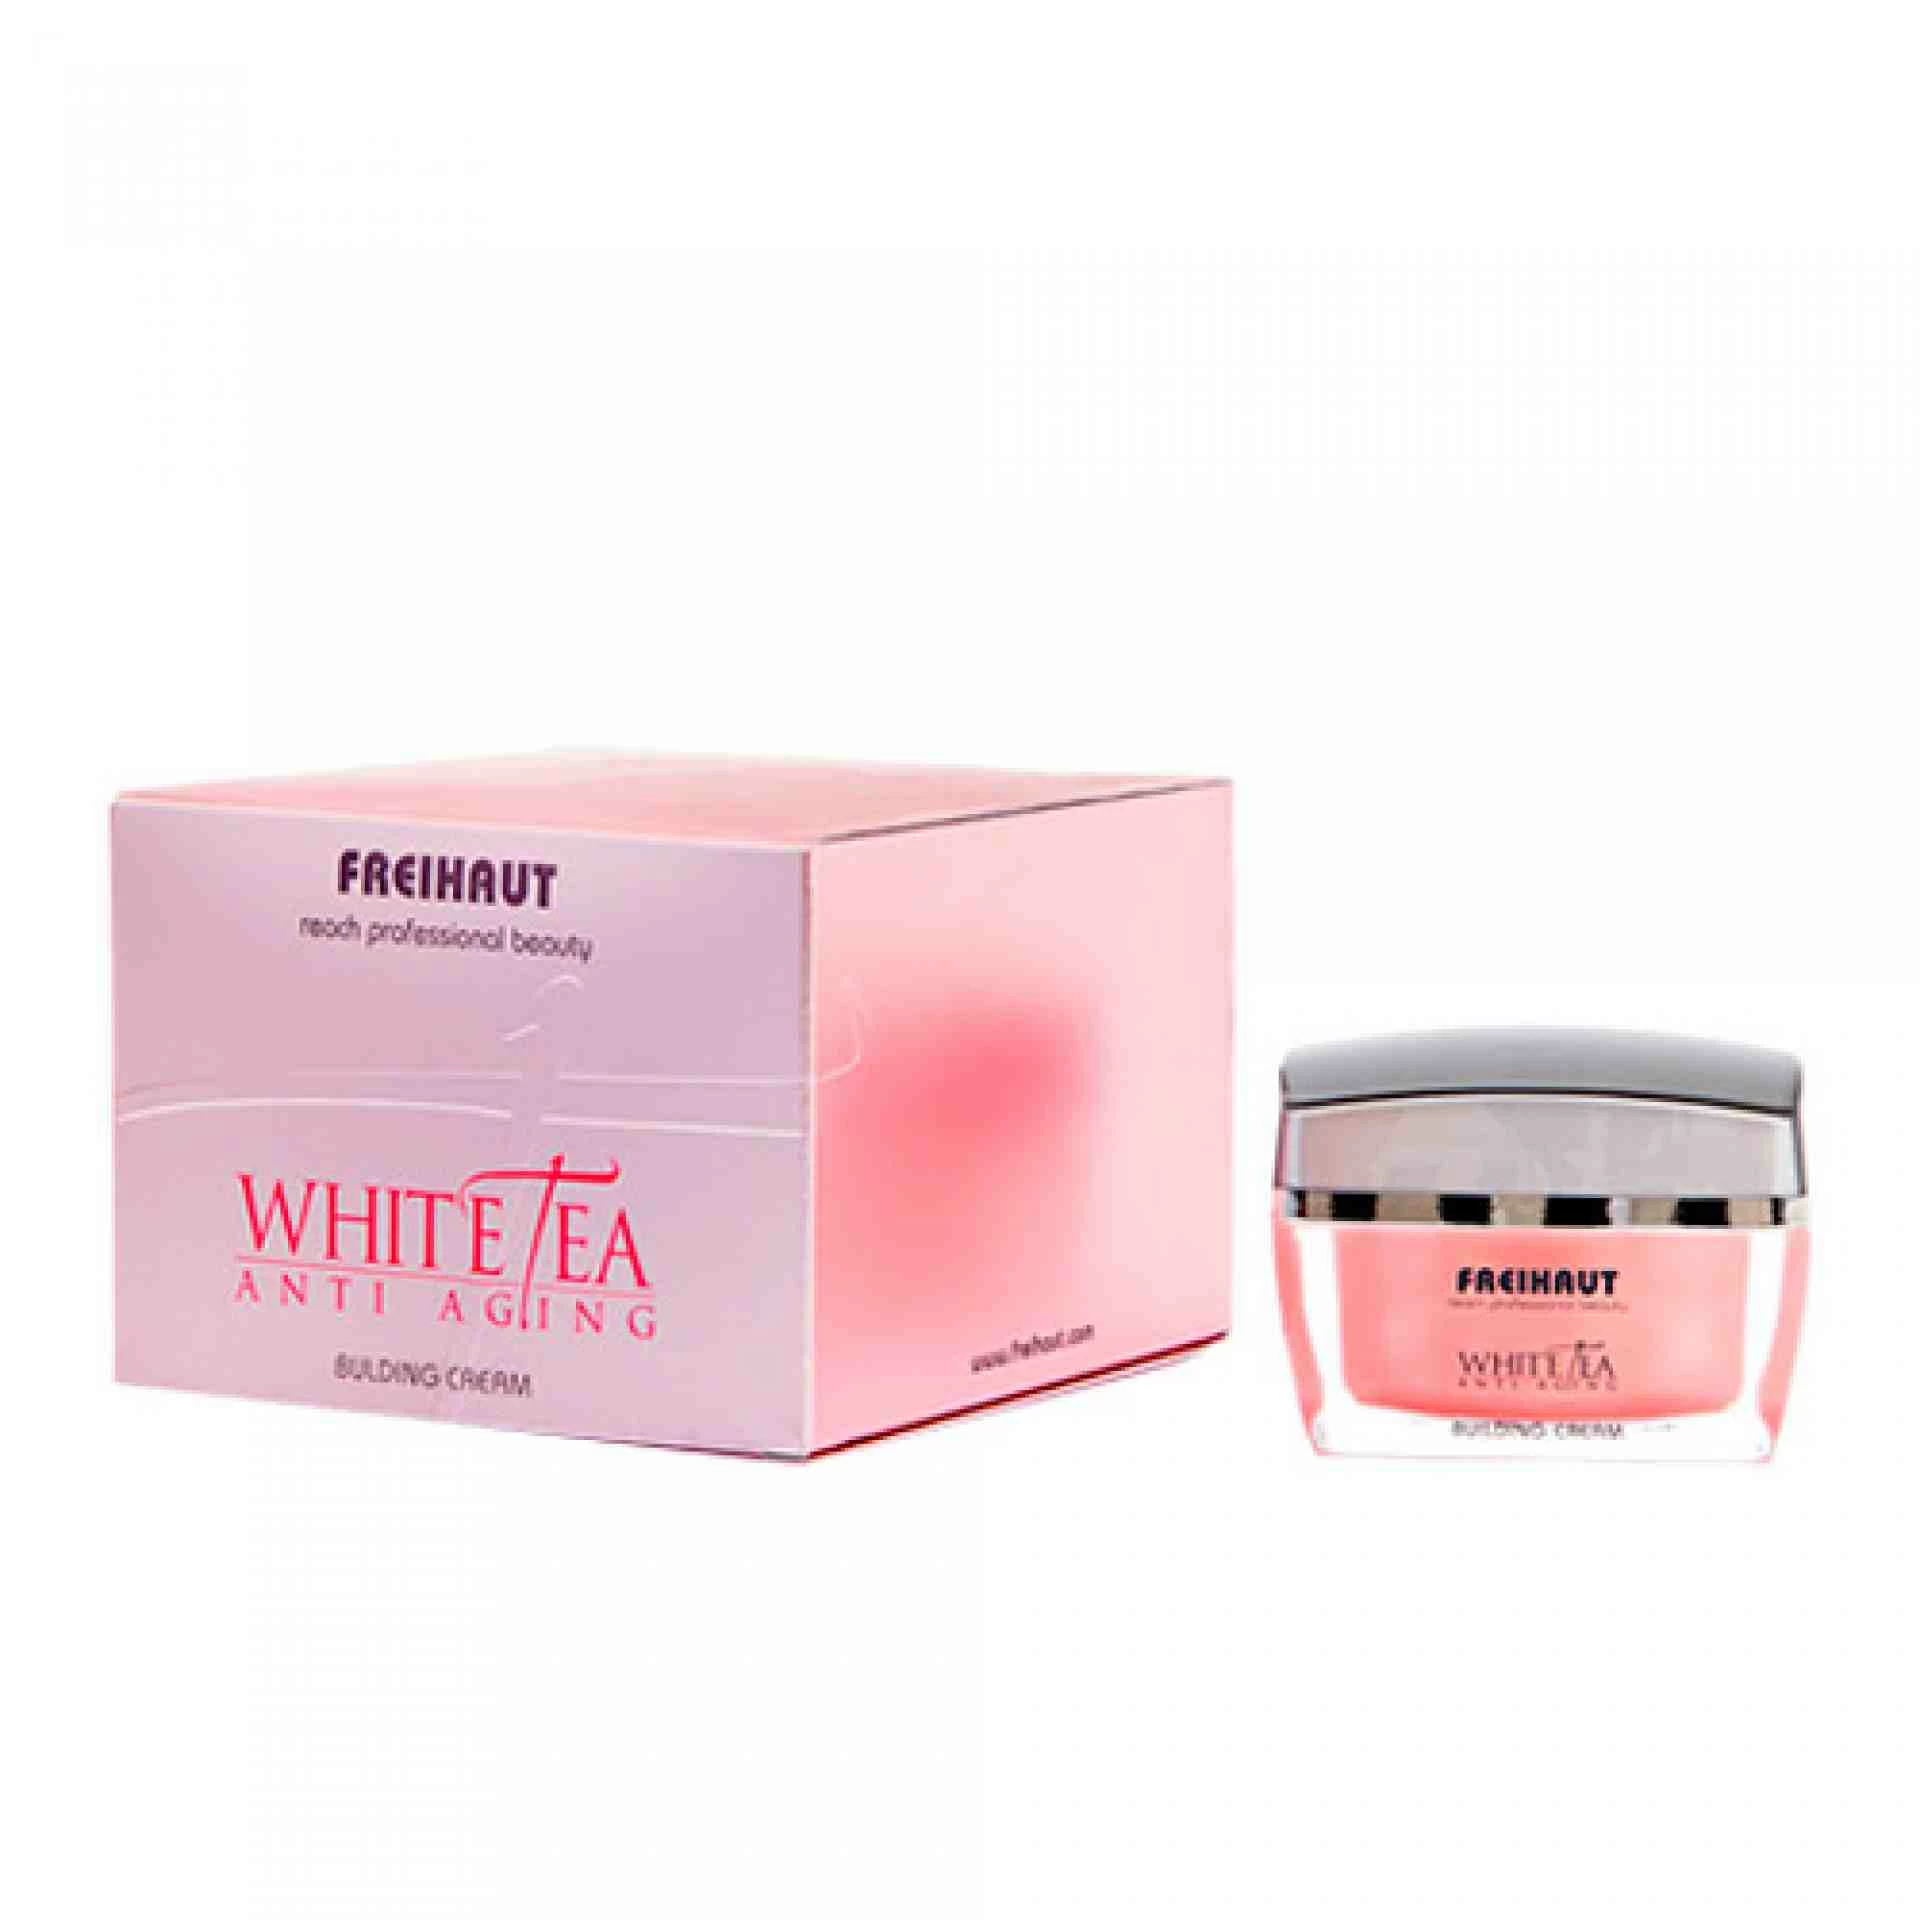 White Tea Building Cream 50ml Freihaut®